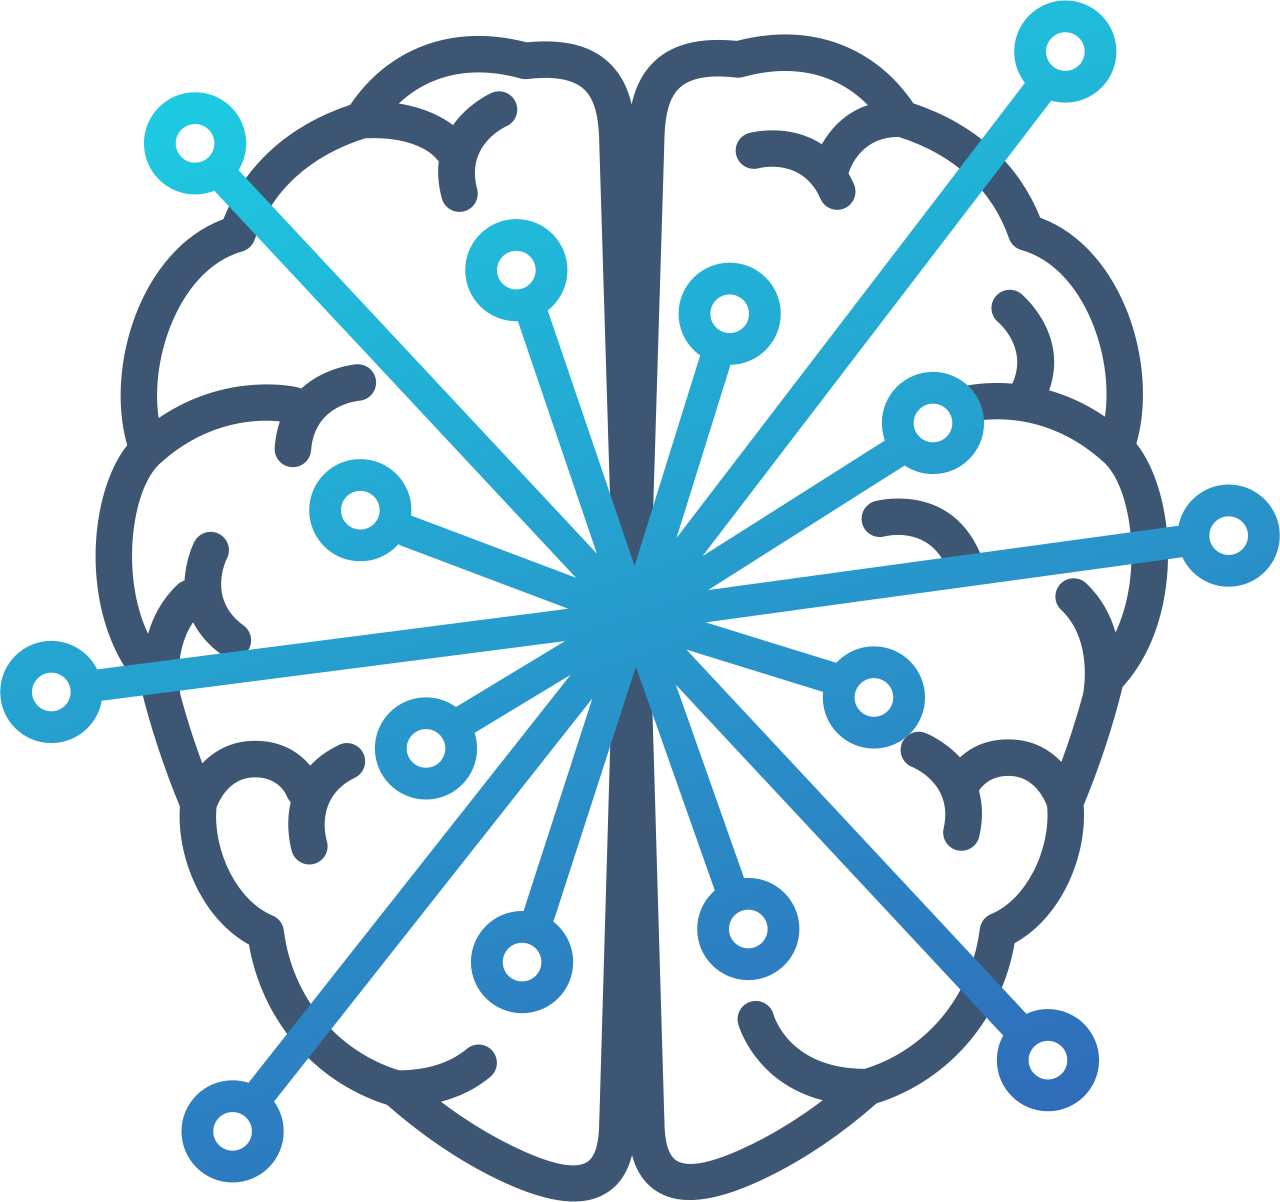 Memory Attention & Comparative 
Cognition Laboratory's logo